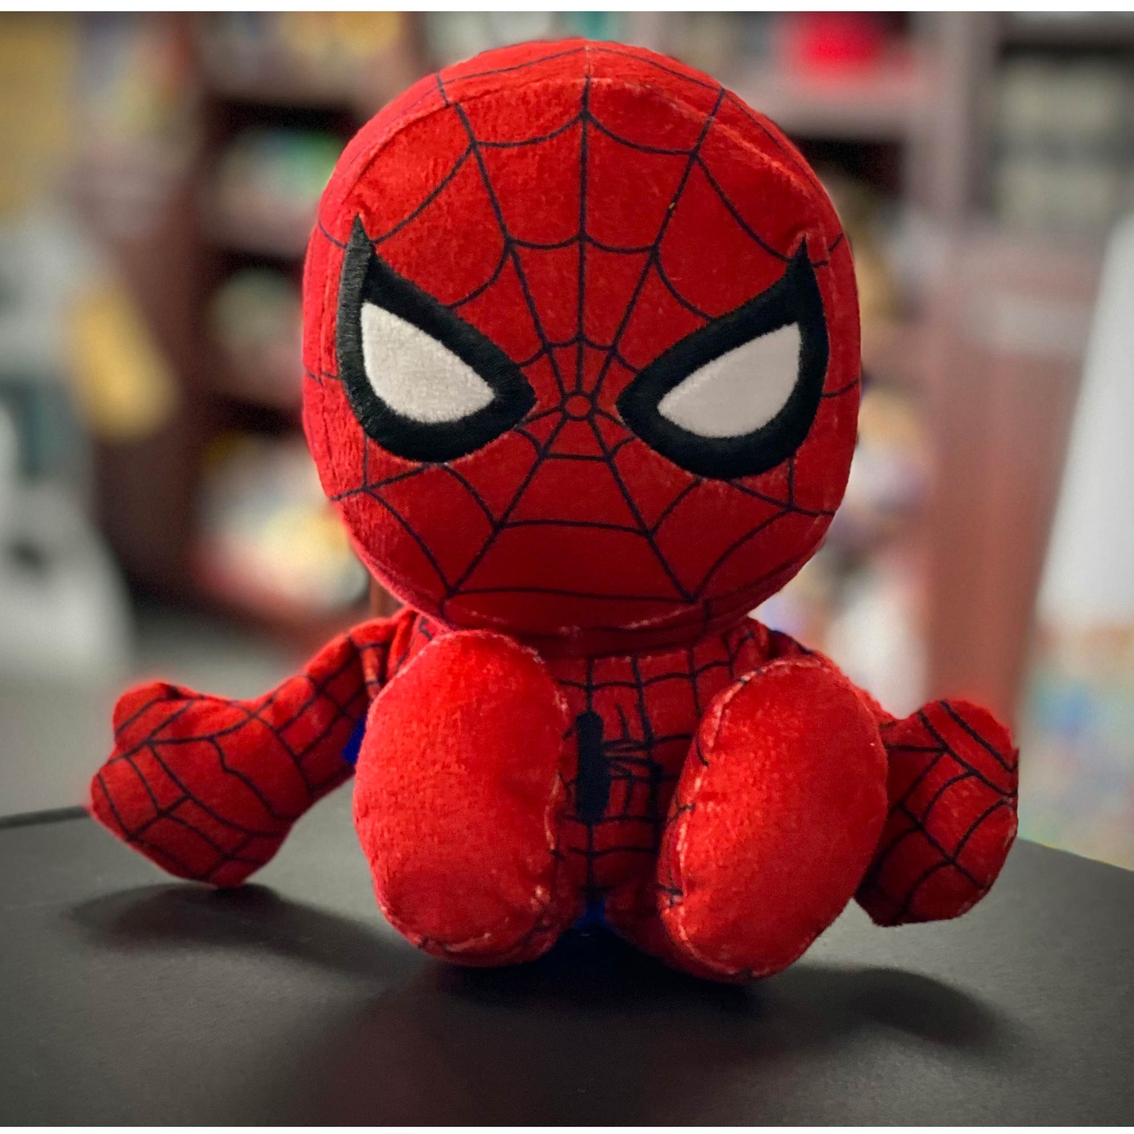 Bleacher Creatures Marvel Spider-Man 10 in. Plush Figure - Image 4 of 6